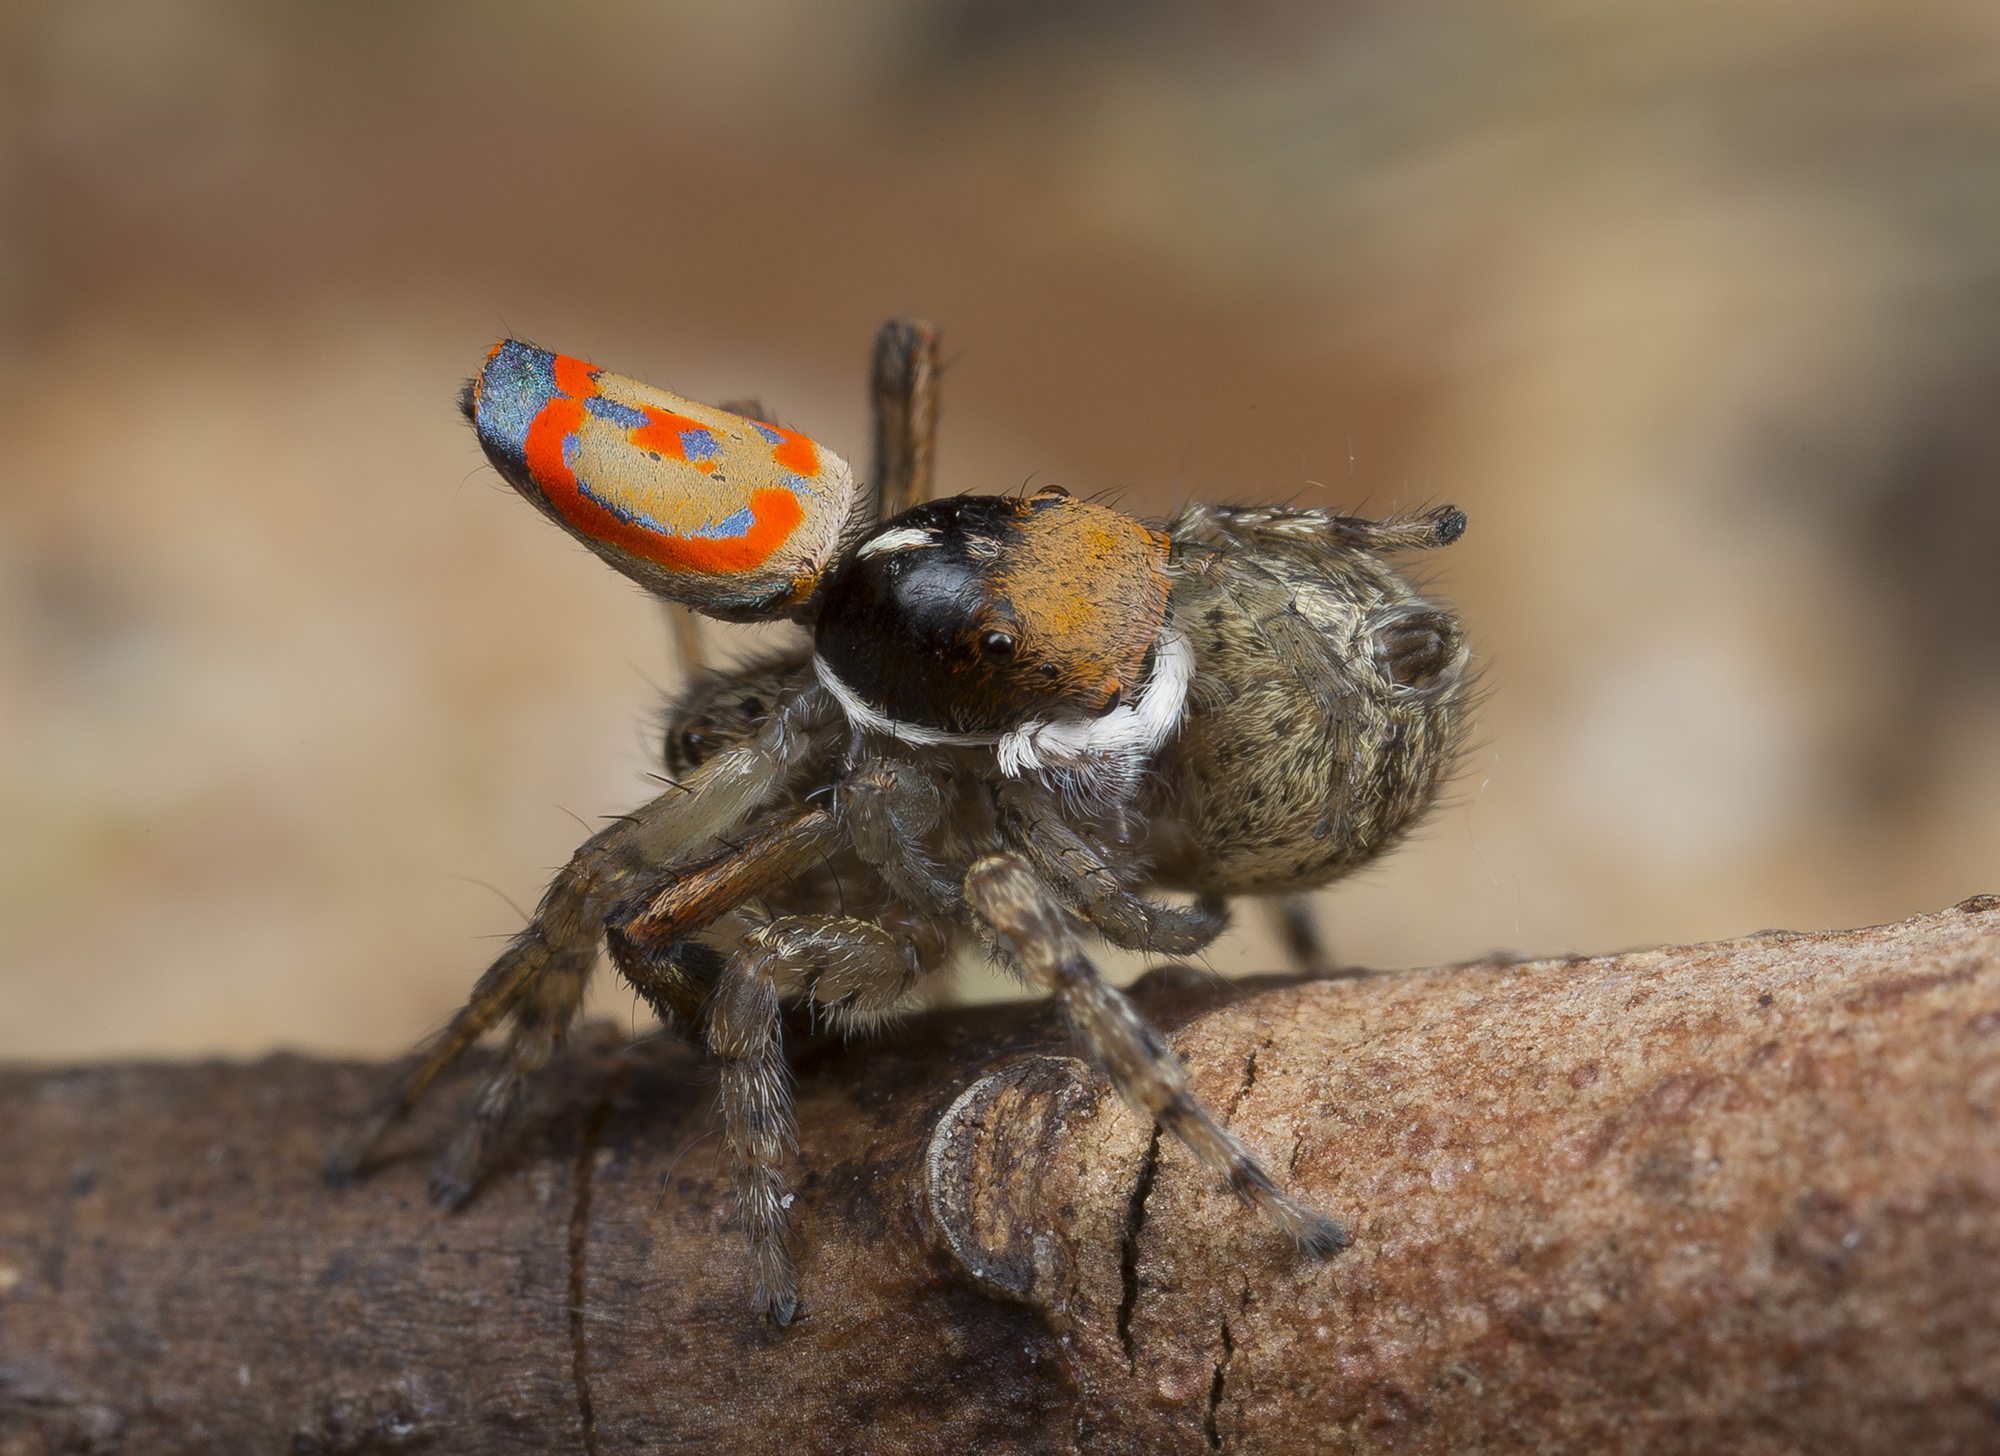 australian peacock spider